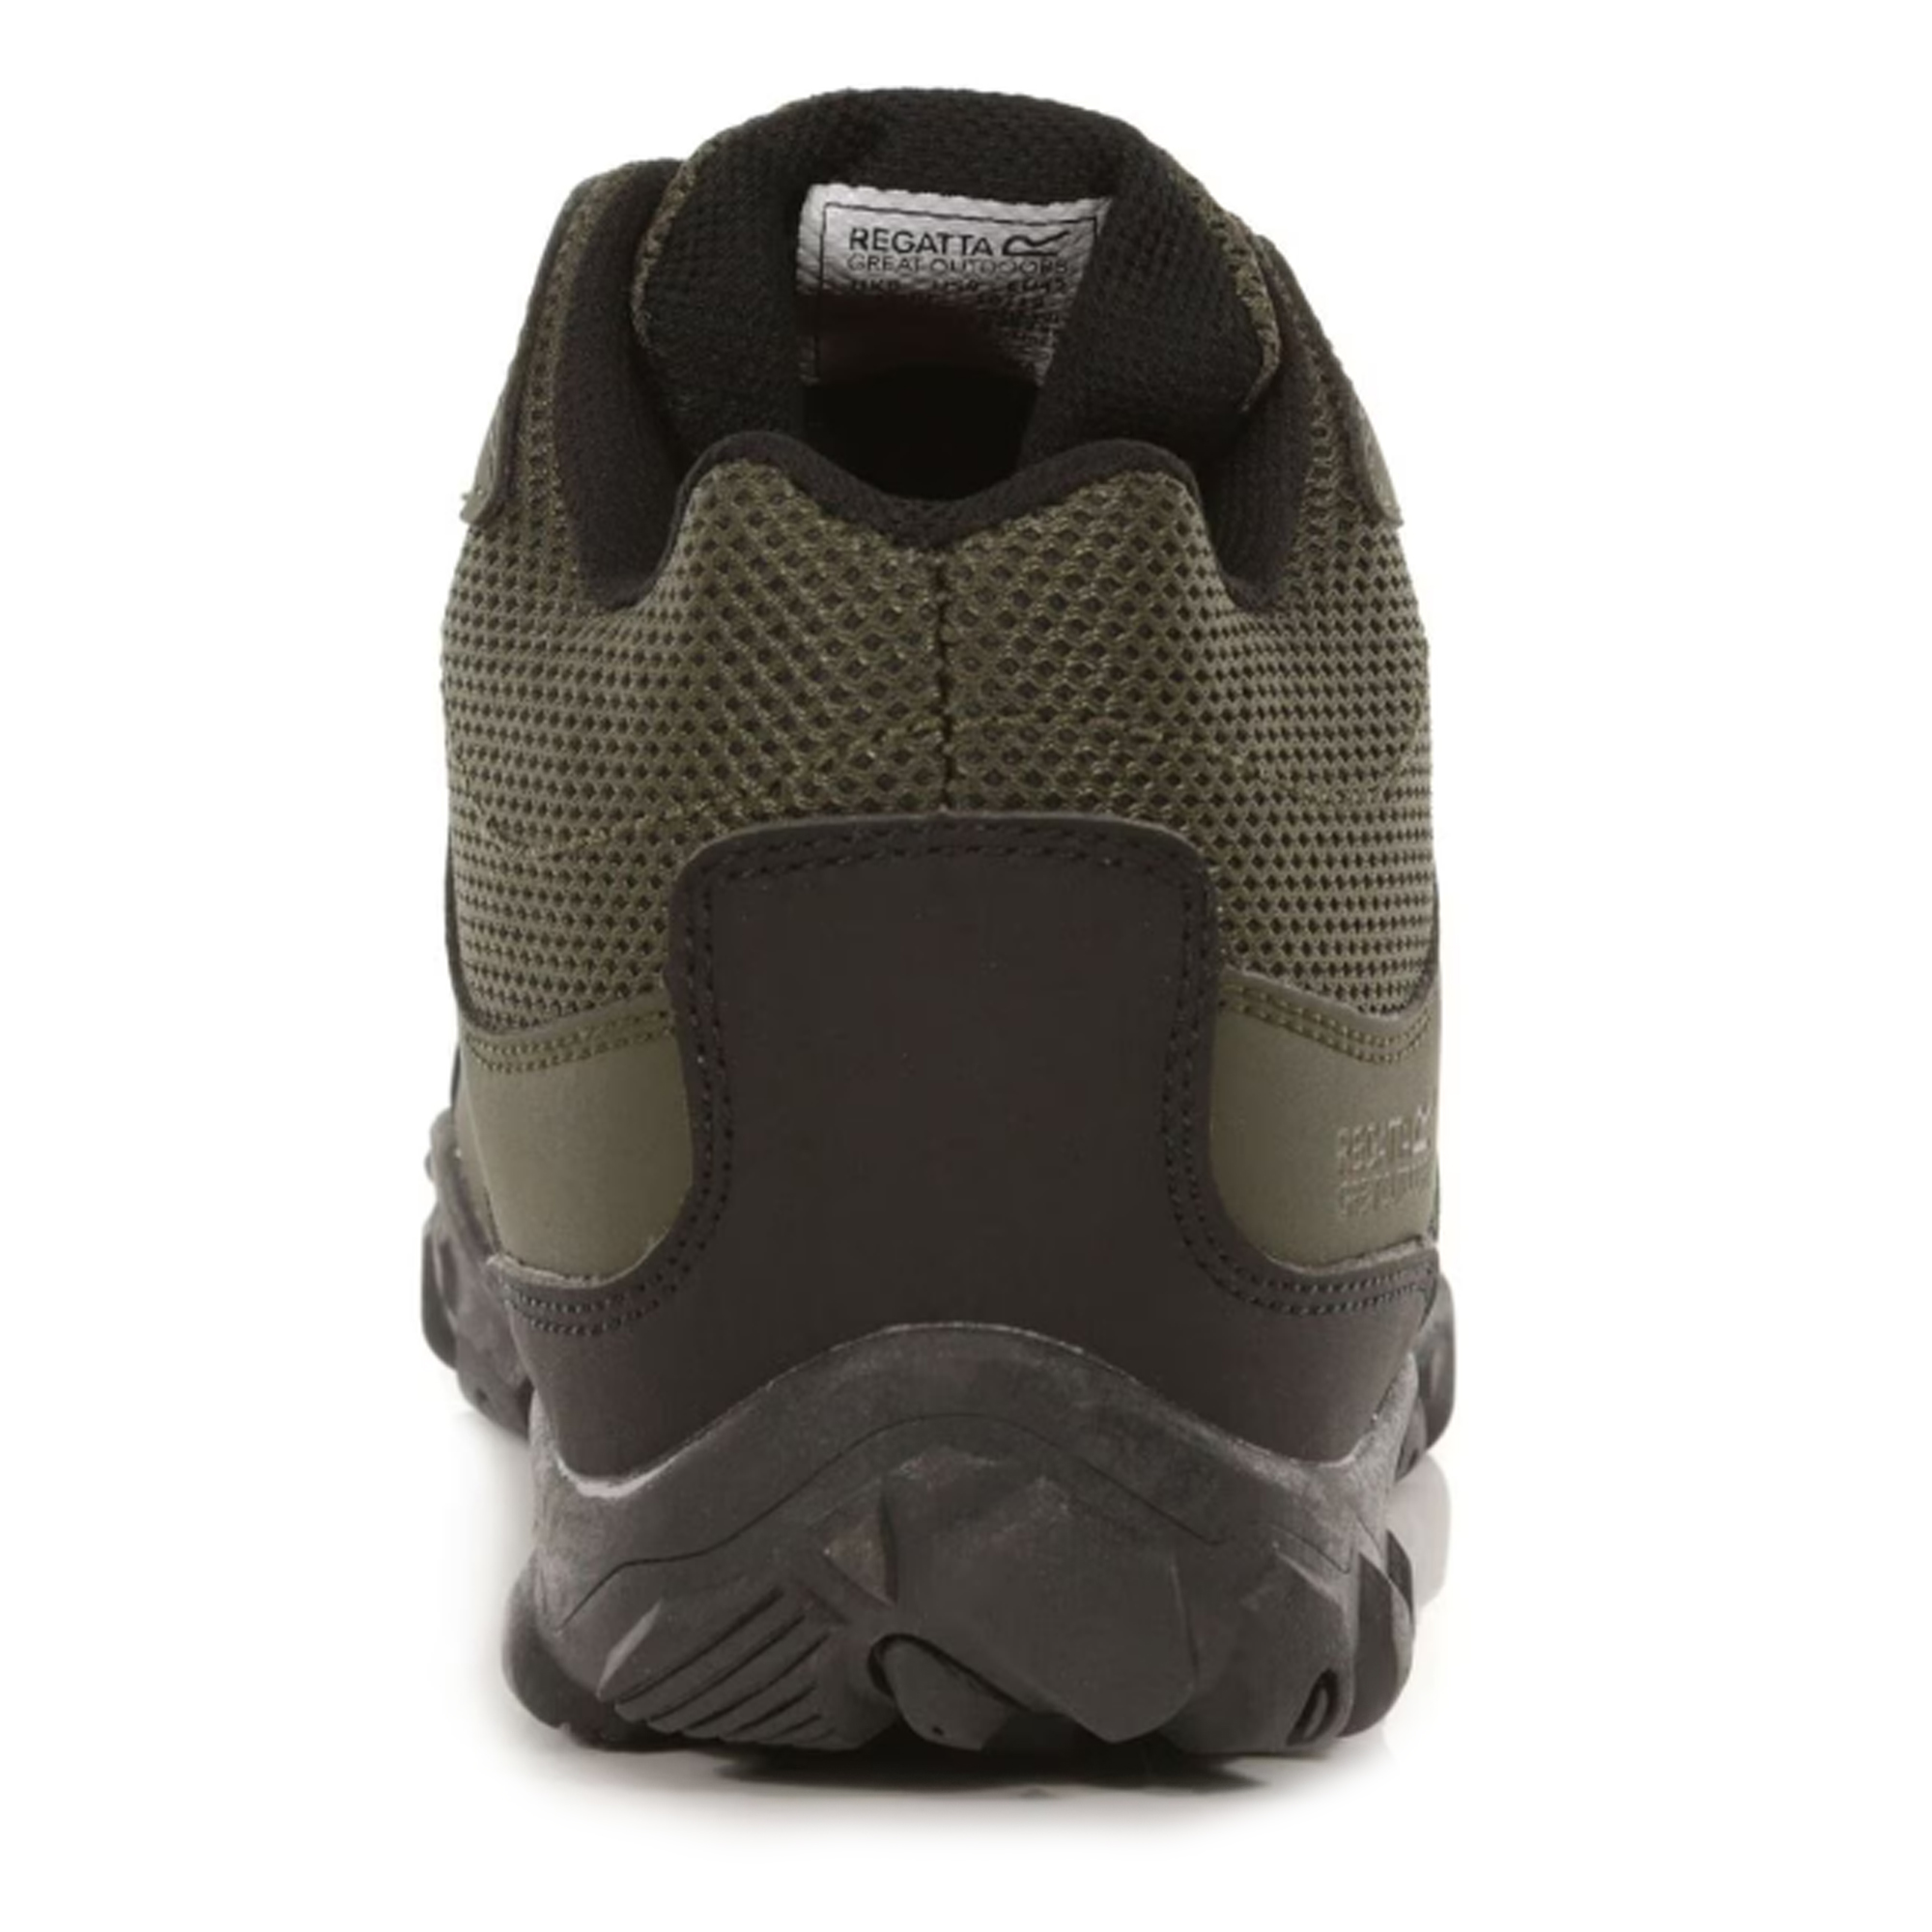 Zapatos De Senderismo Con Cordones Diseño Impermeable Regatta Edgepoint